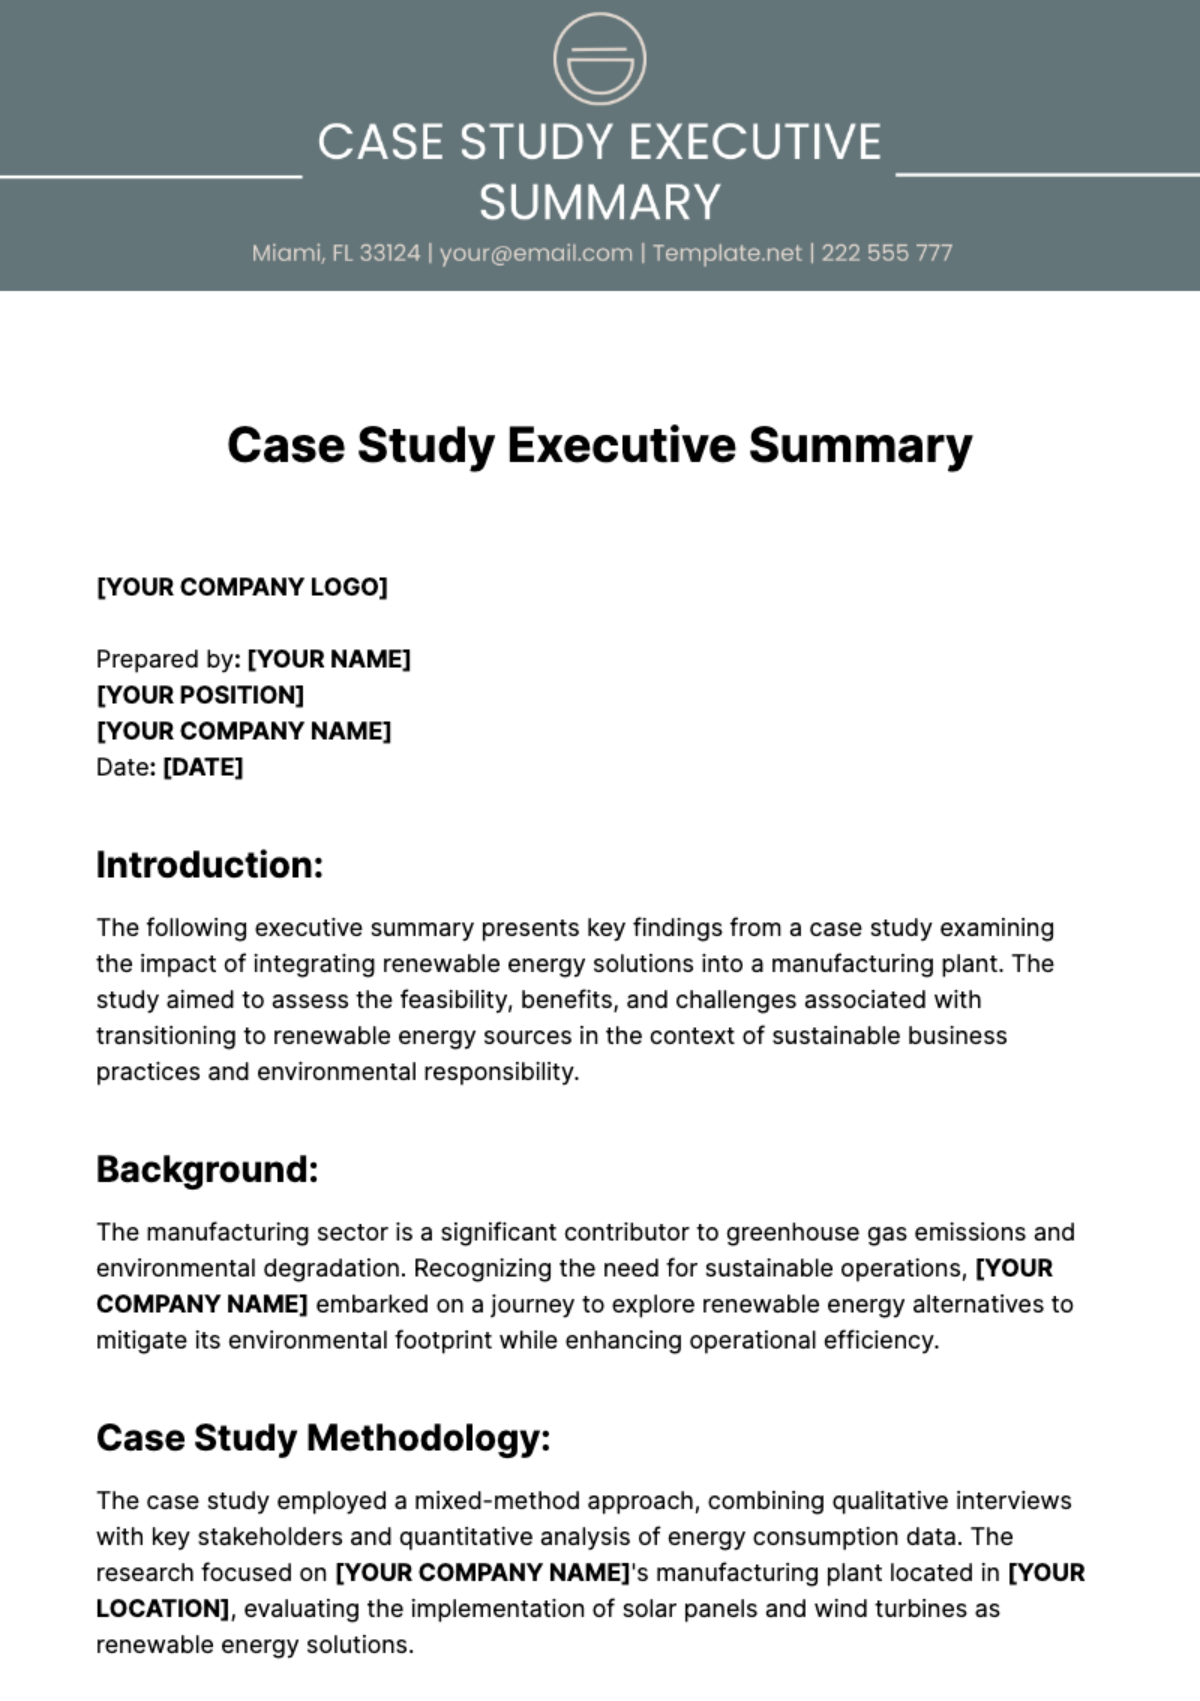 Case Study Executive Summary Template